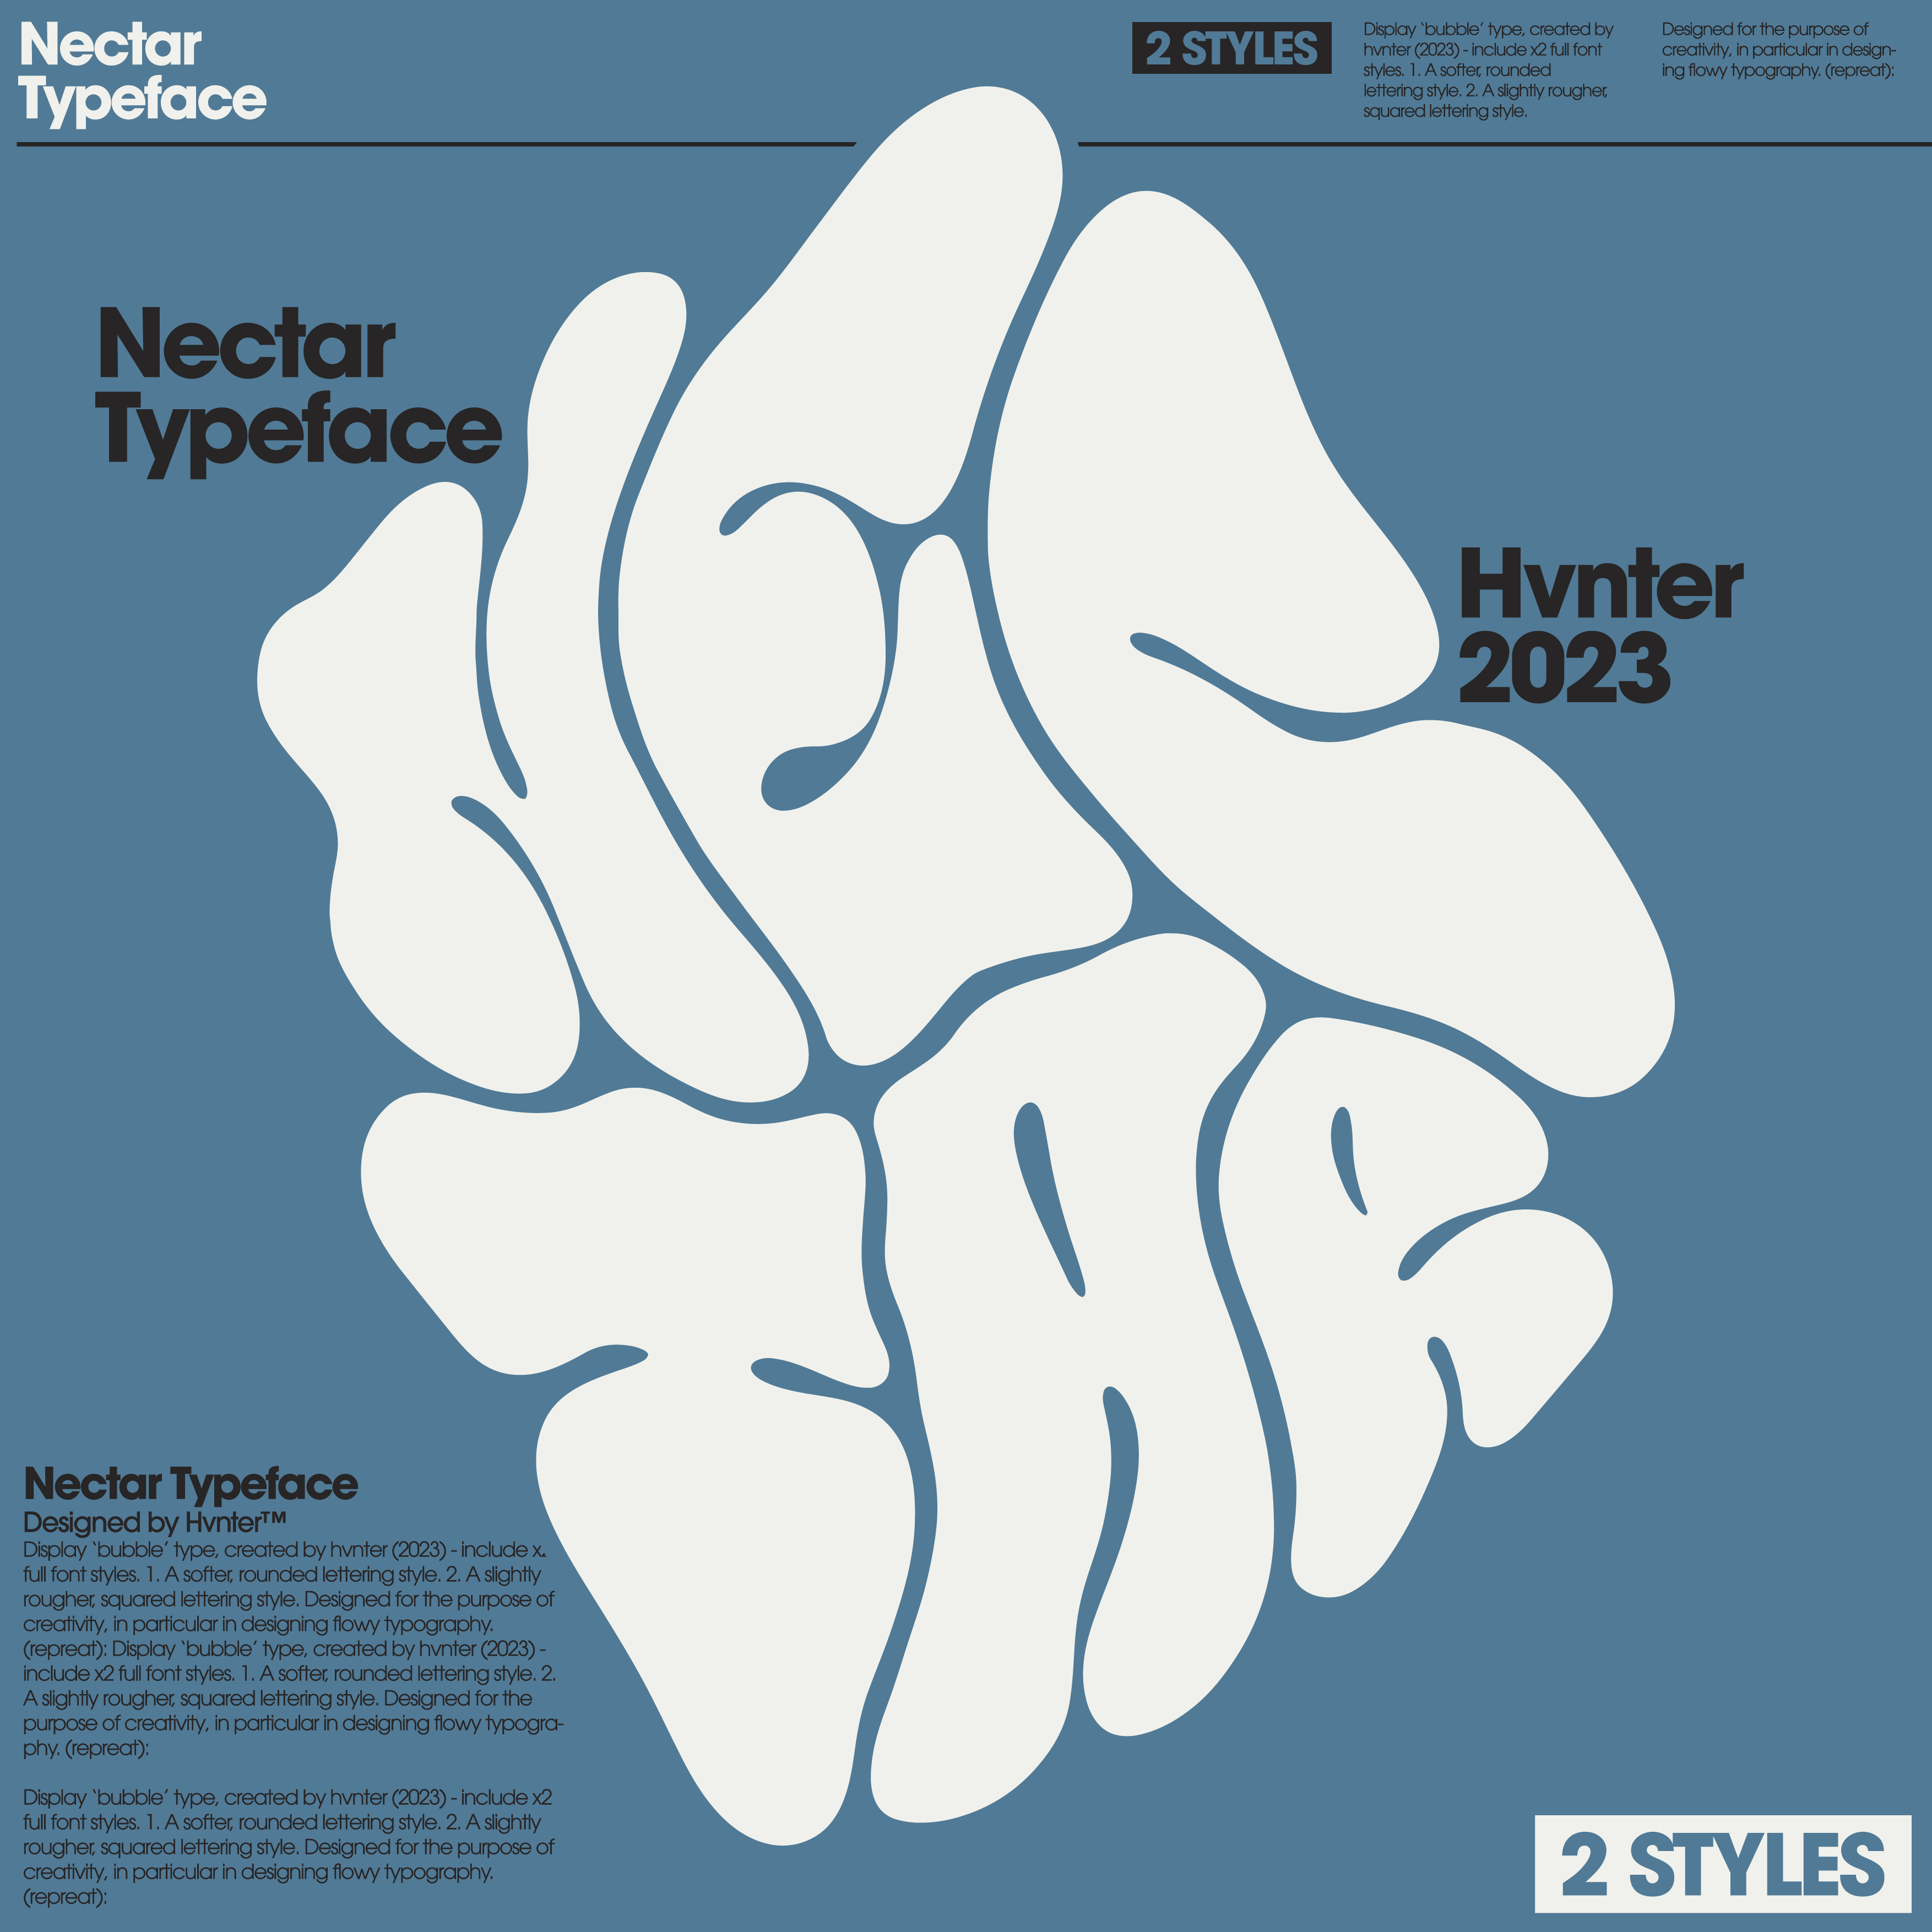 NECTAR Typeface